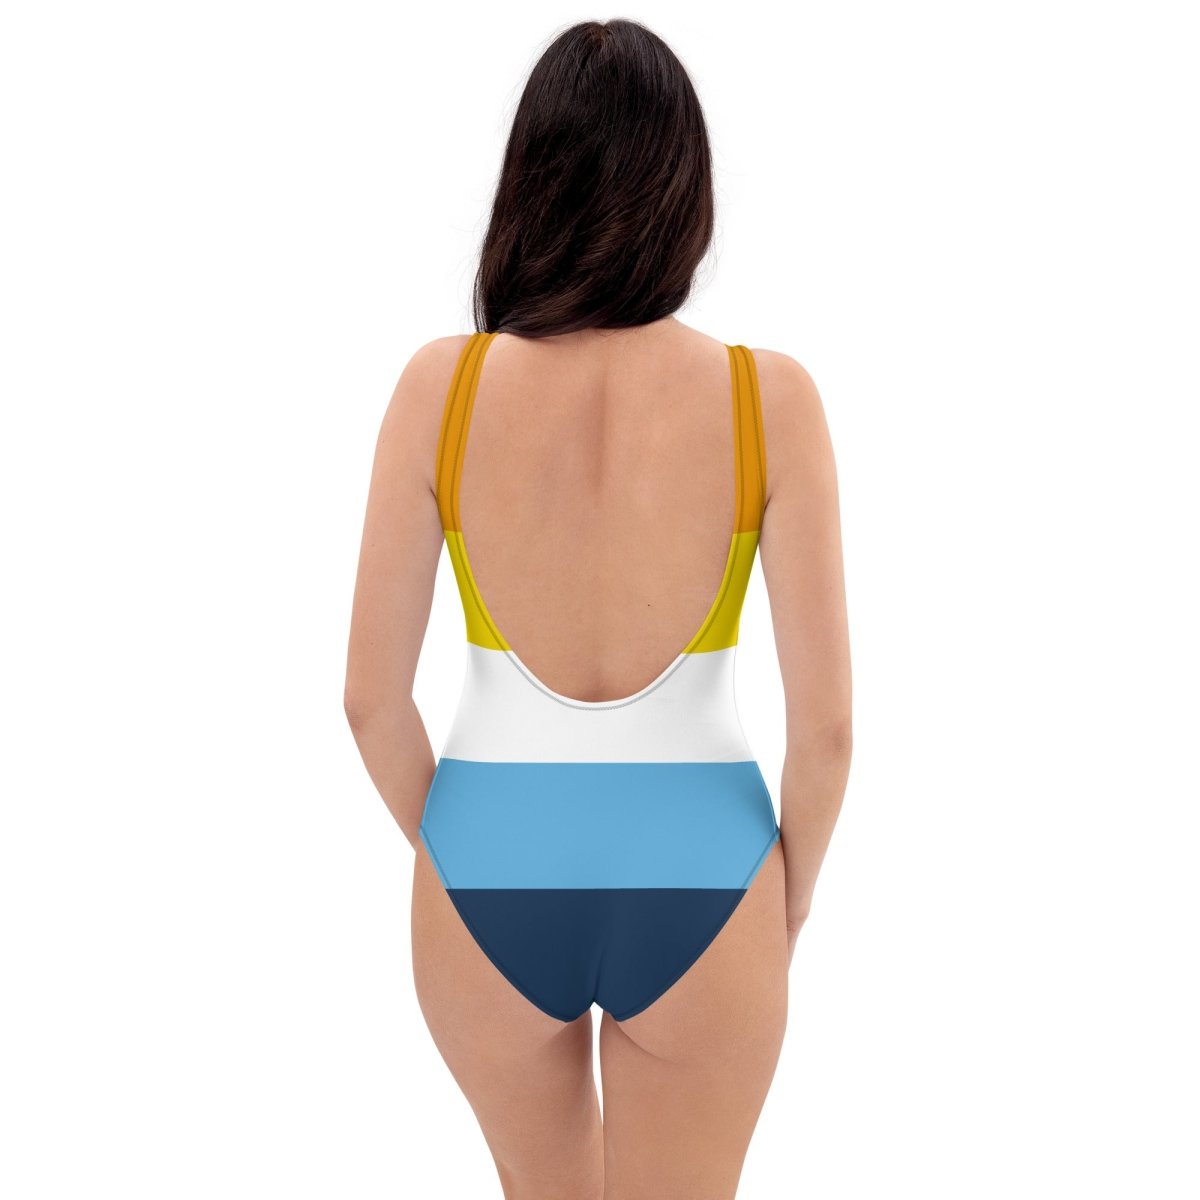 Aroace Stripe One-Piece Swimsuit - On Trend Shirts